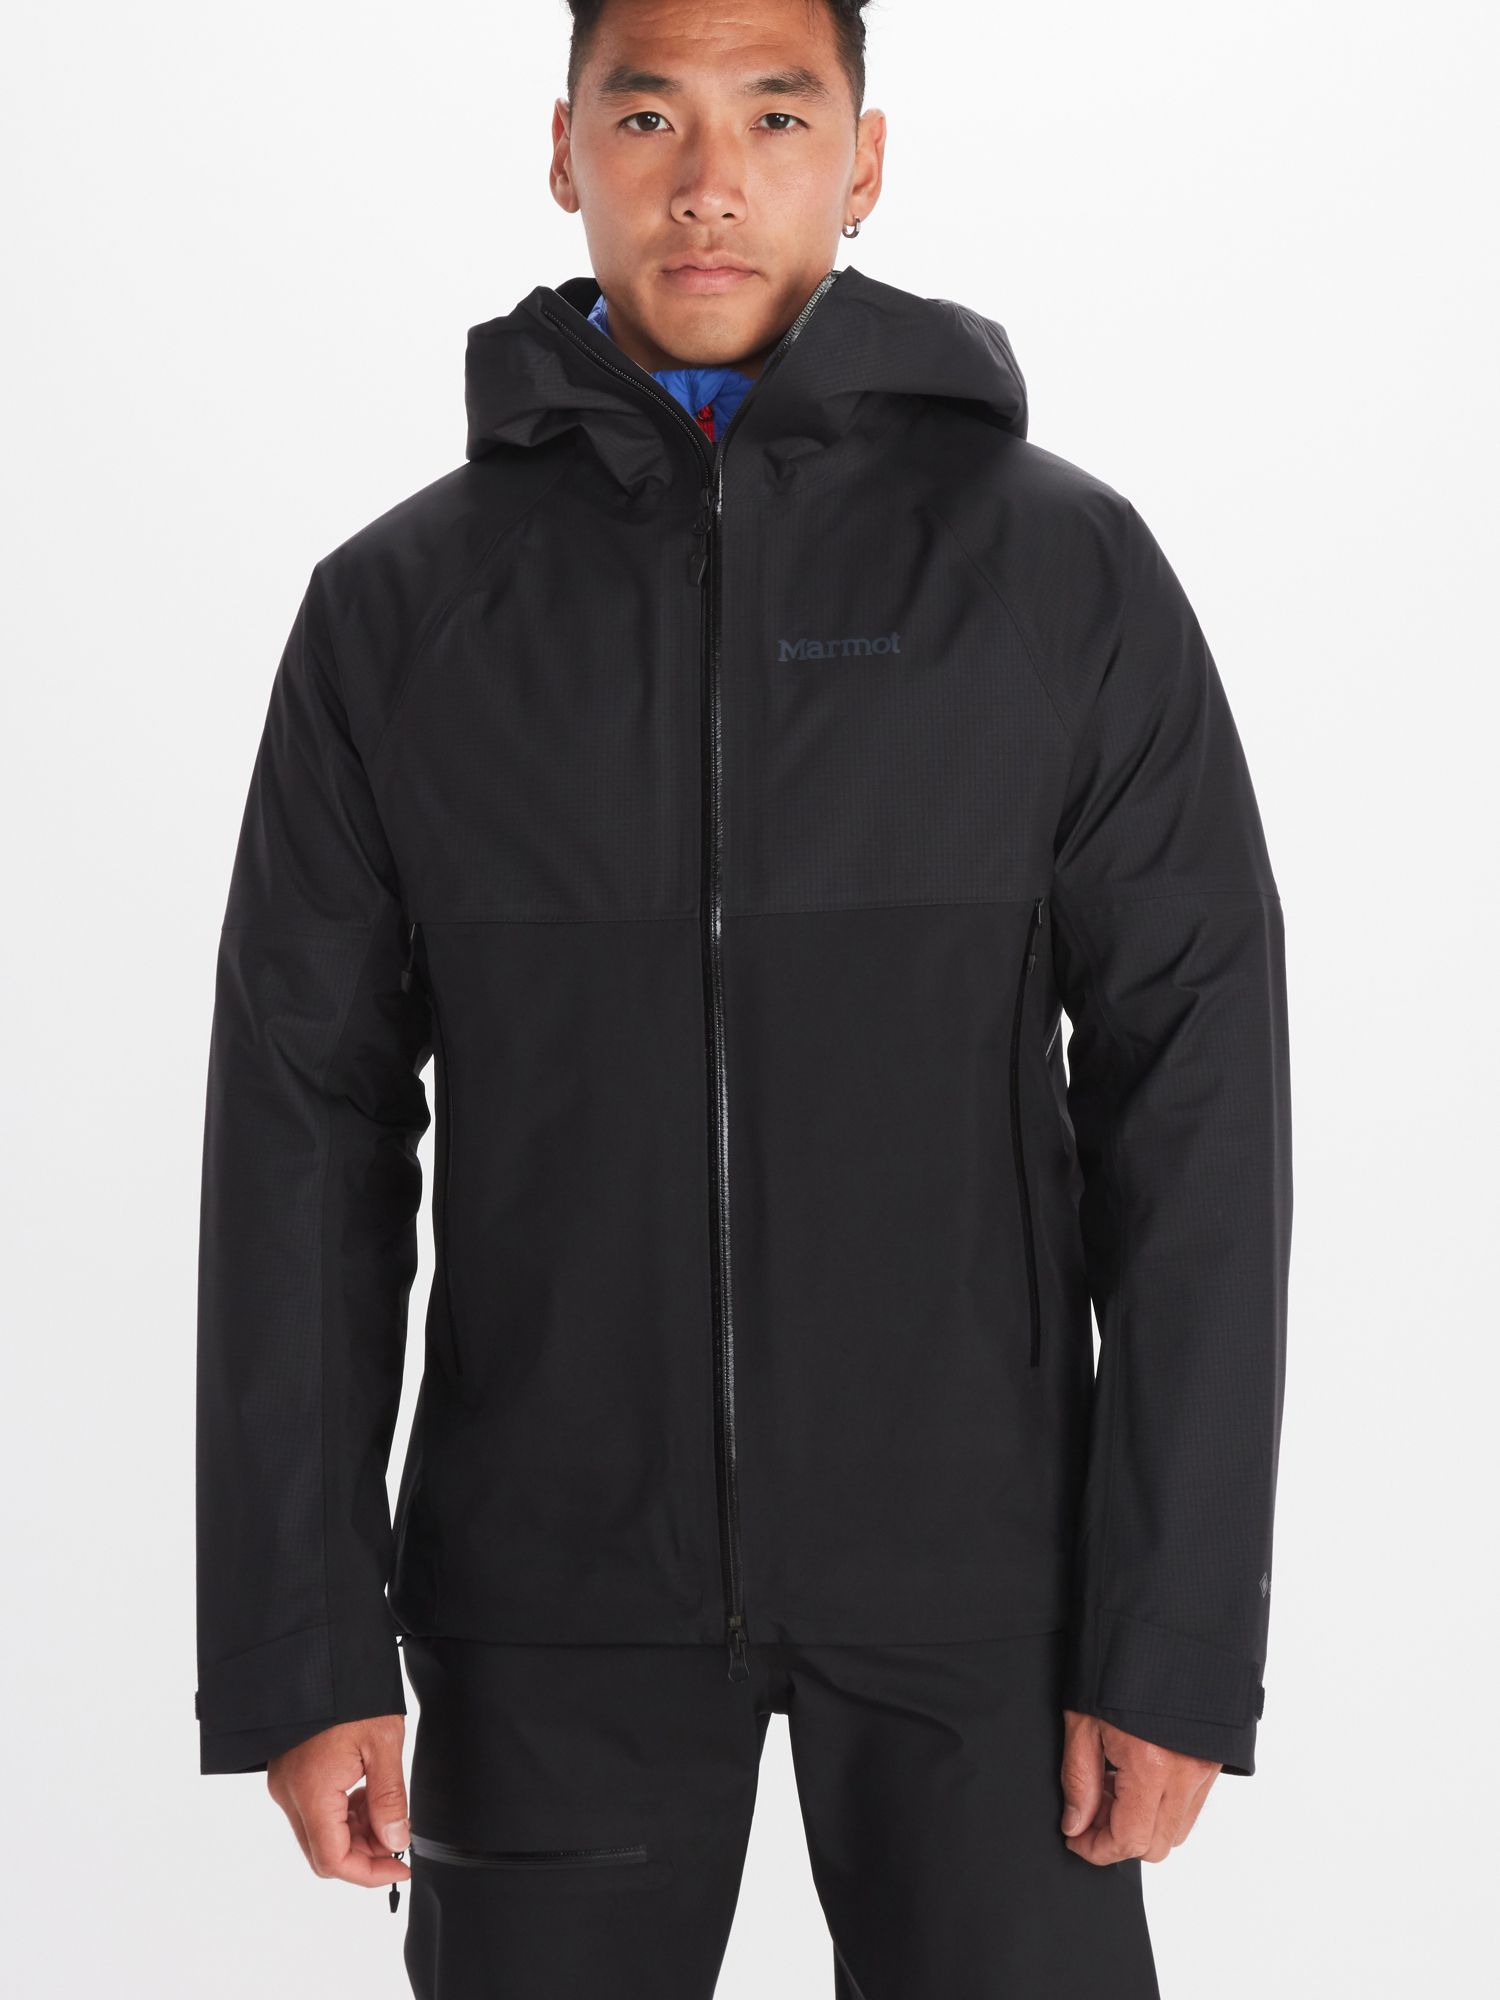 Men's GORE-TEX® Mitre Peak Jacket | Marmot